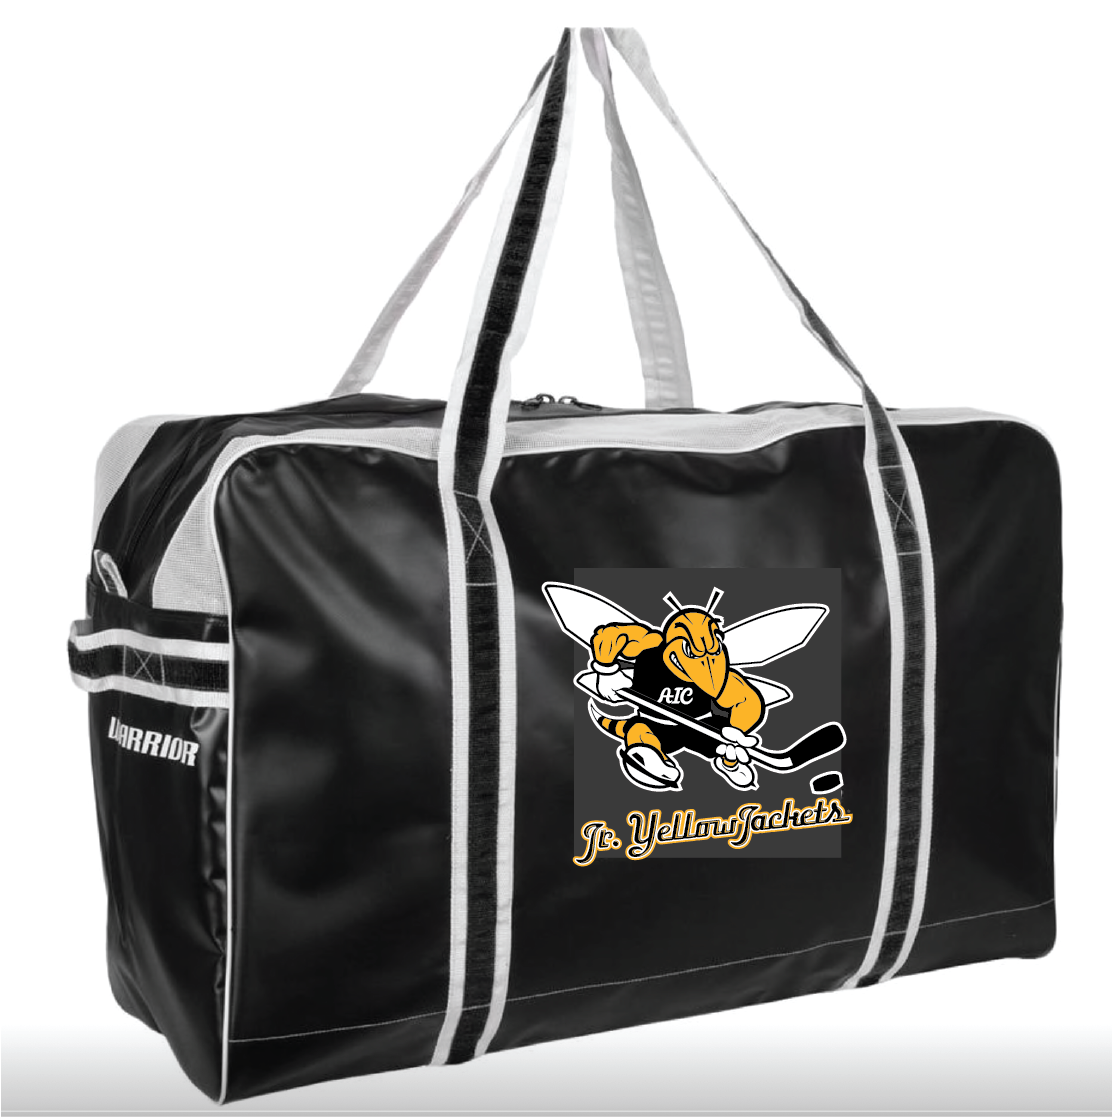 Jr Yellow Jackets Warrior Pro Hockey Bag - DK's Hockey Shop